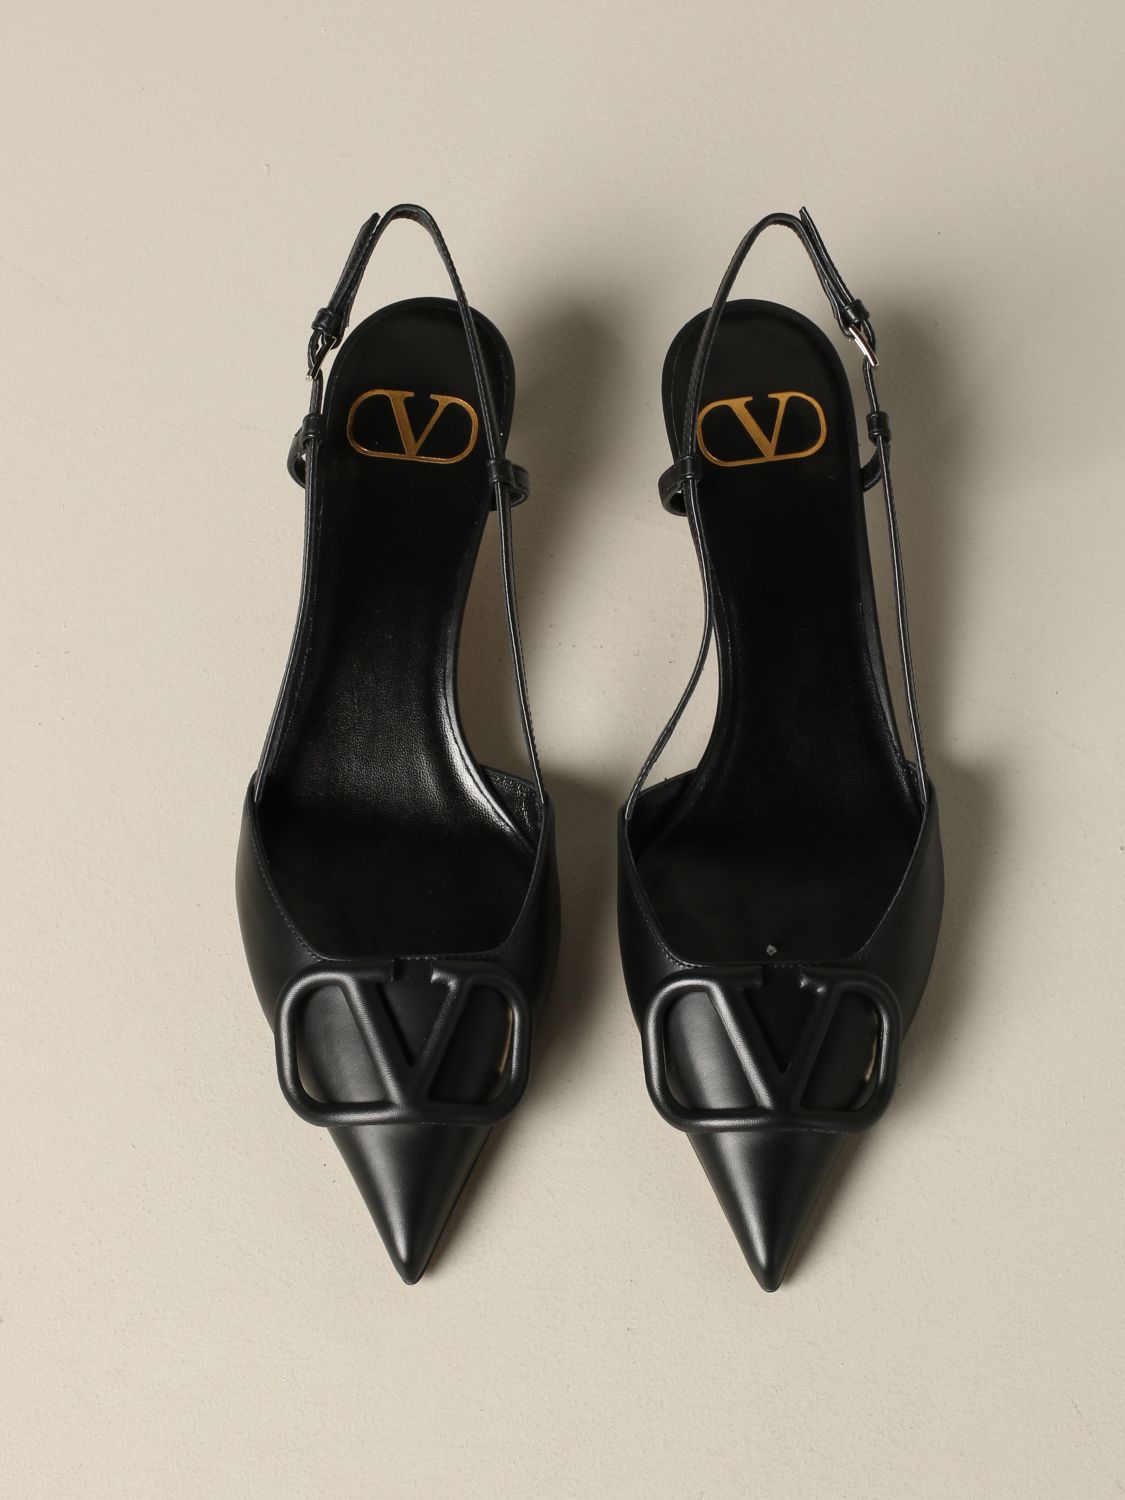 Valentino Garavani Outlet: court shoes for women - Black | Valentino Garavani court shoes ...